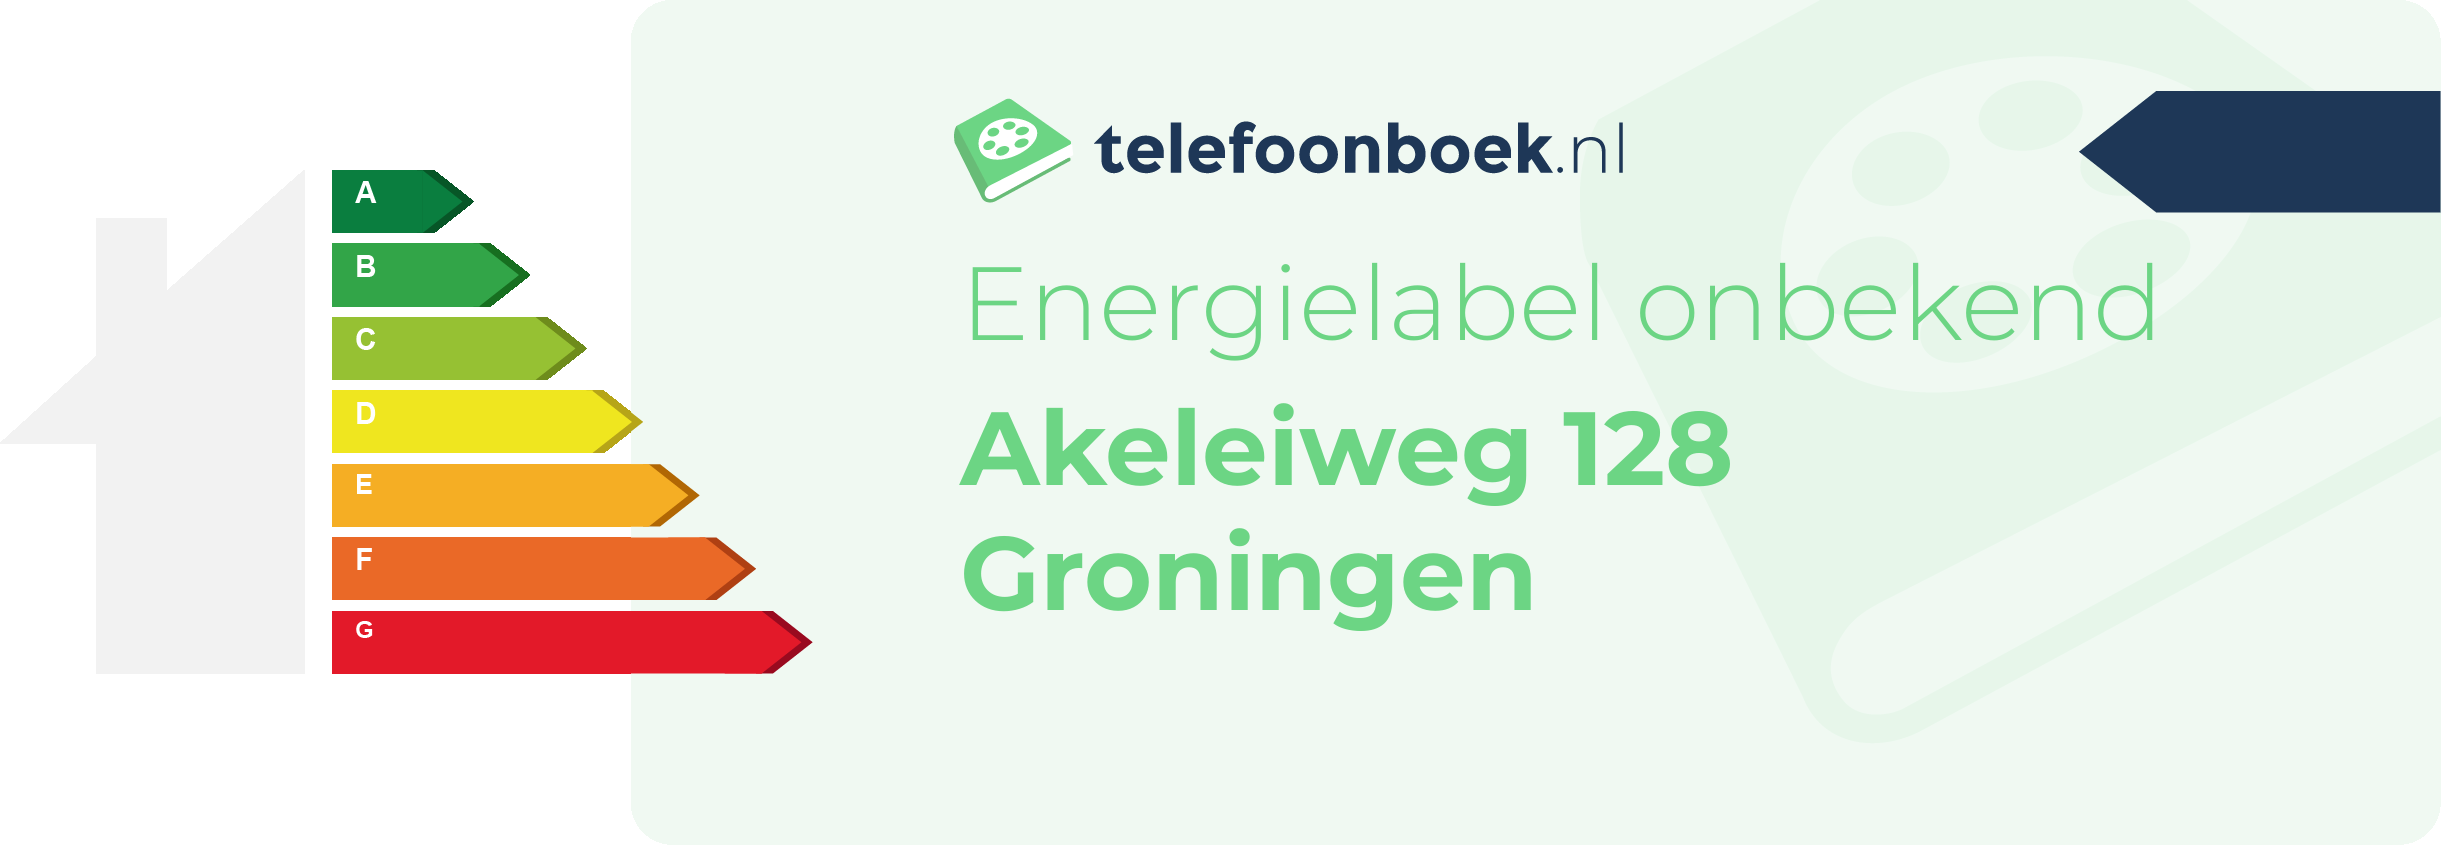 Energielabel Akeleiweg 128 Groningen